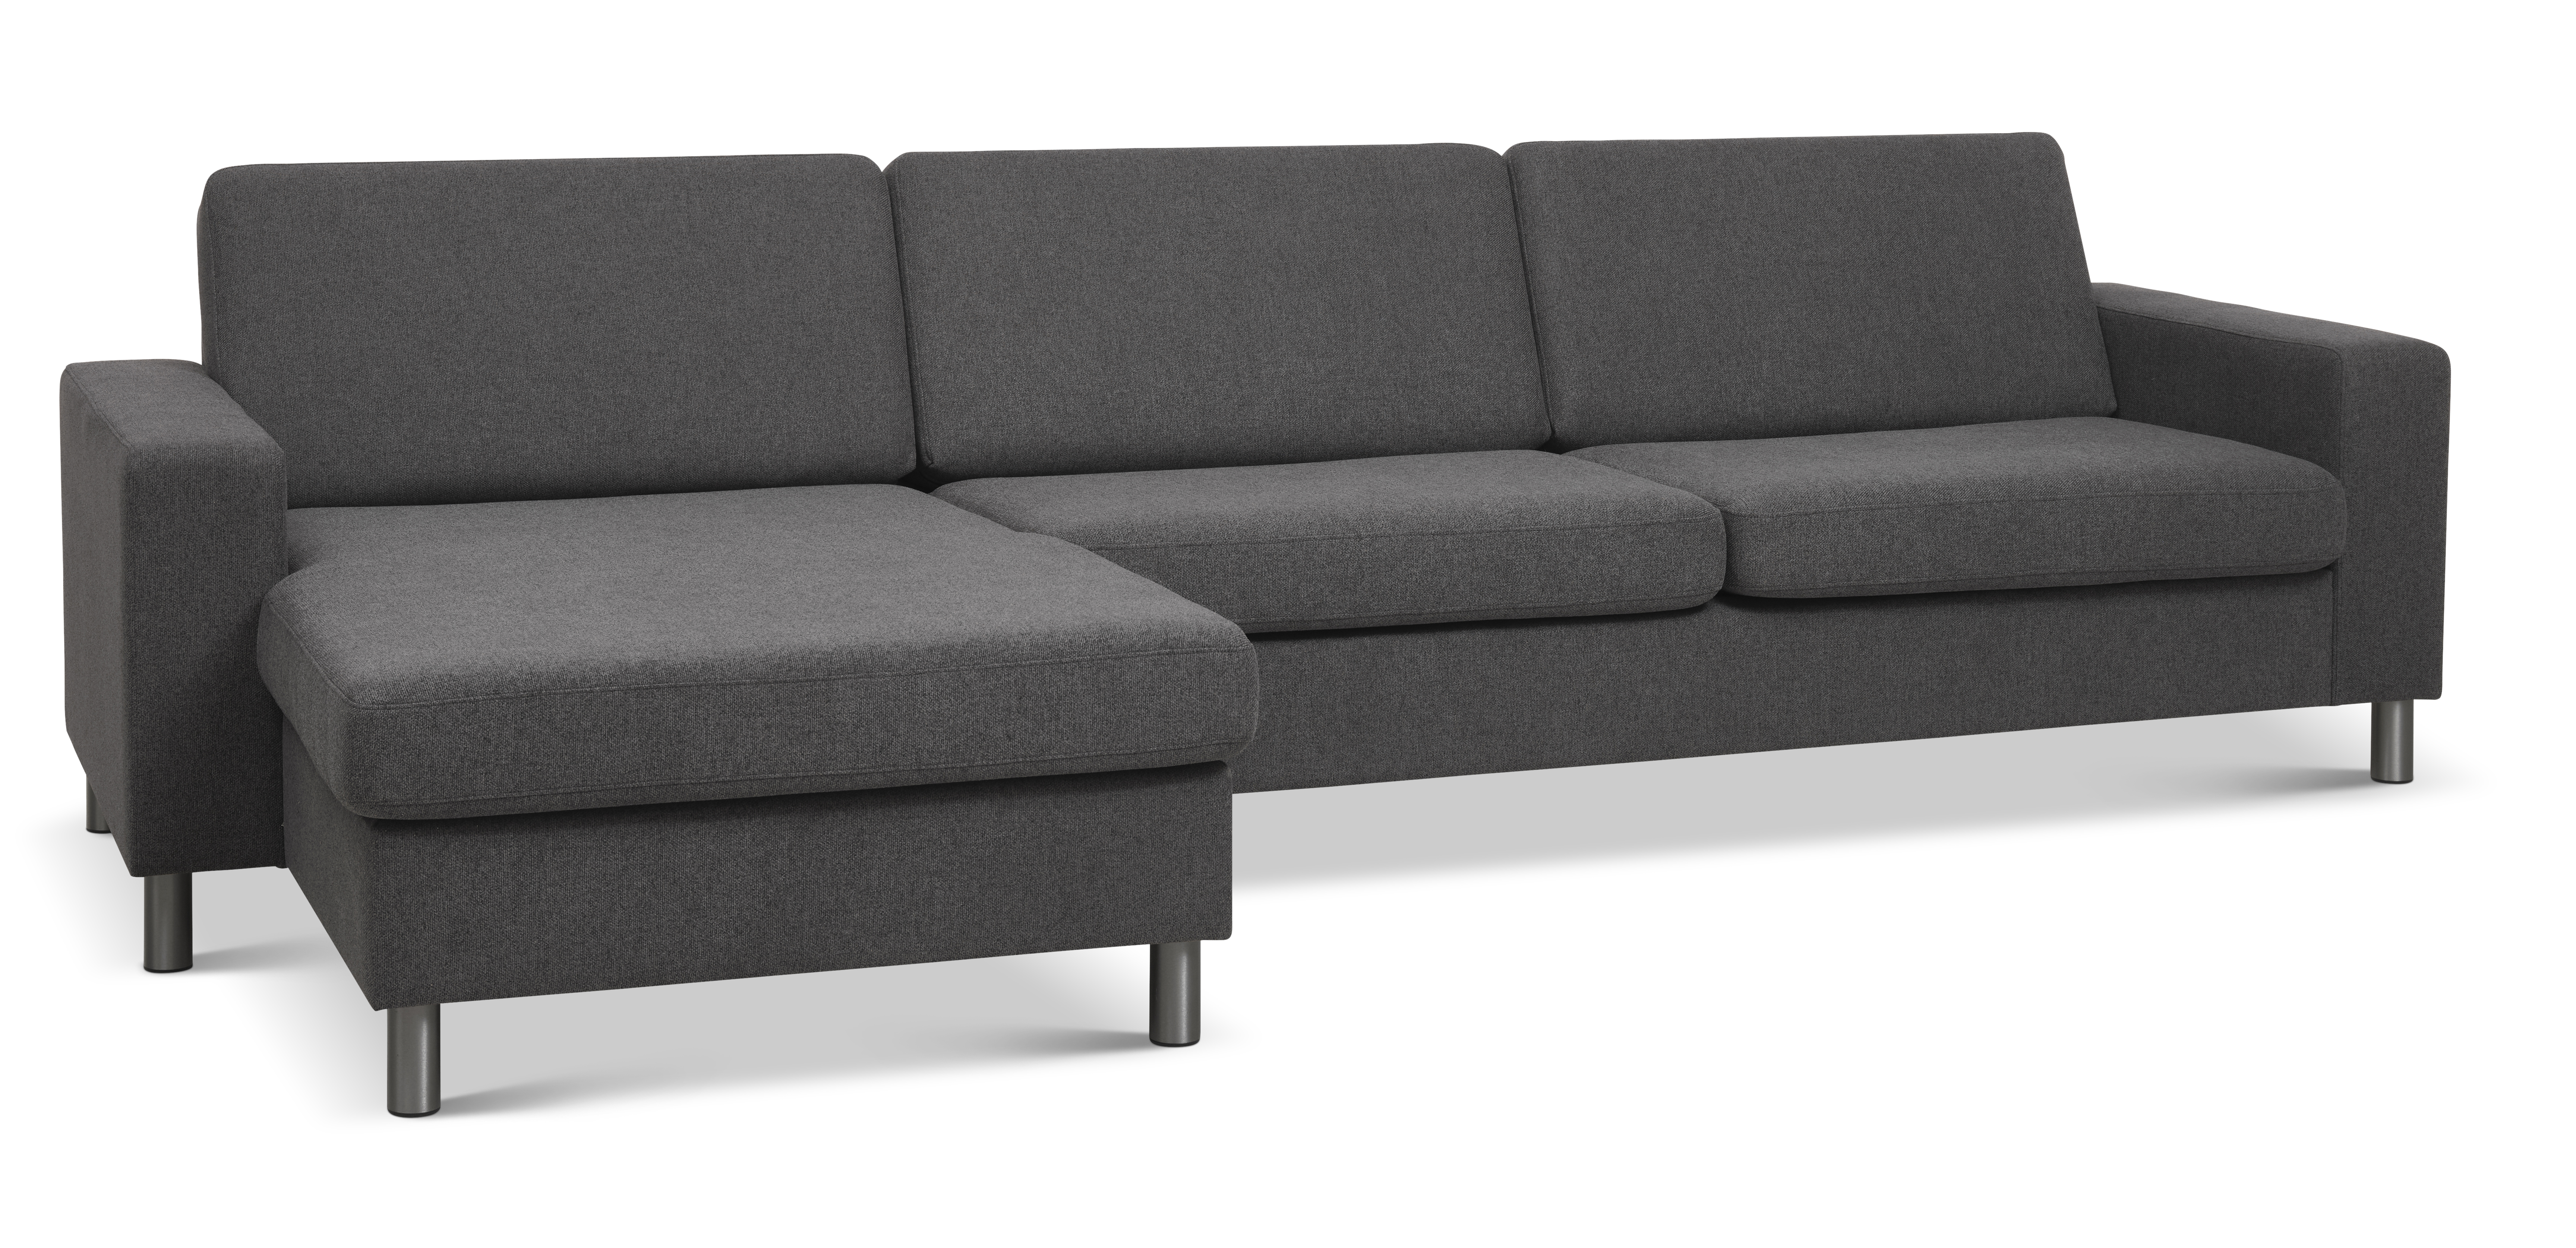 Pan set 8 3D XL sofa, m. chaiselong - antracitgrå polyester stof og børstet aluminium